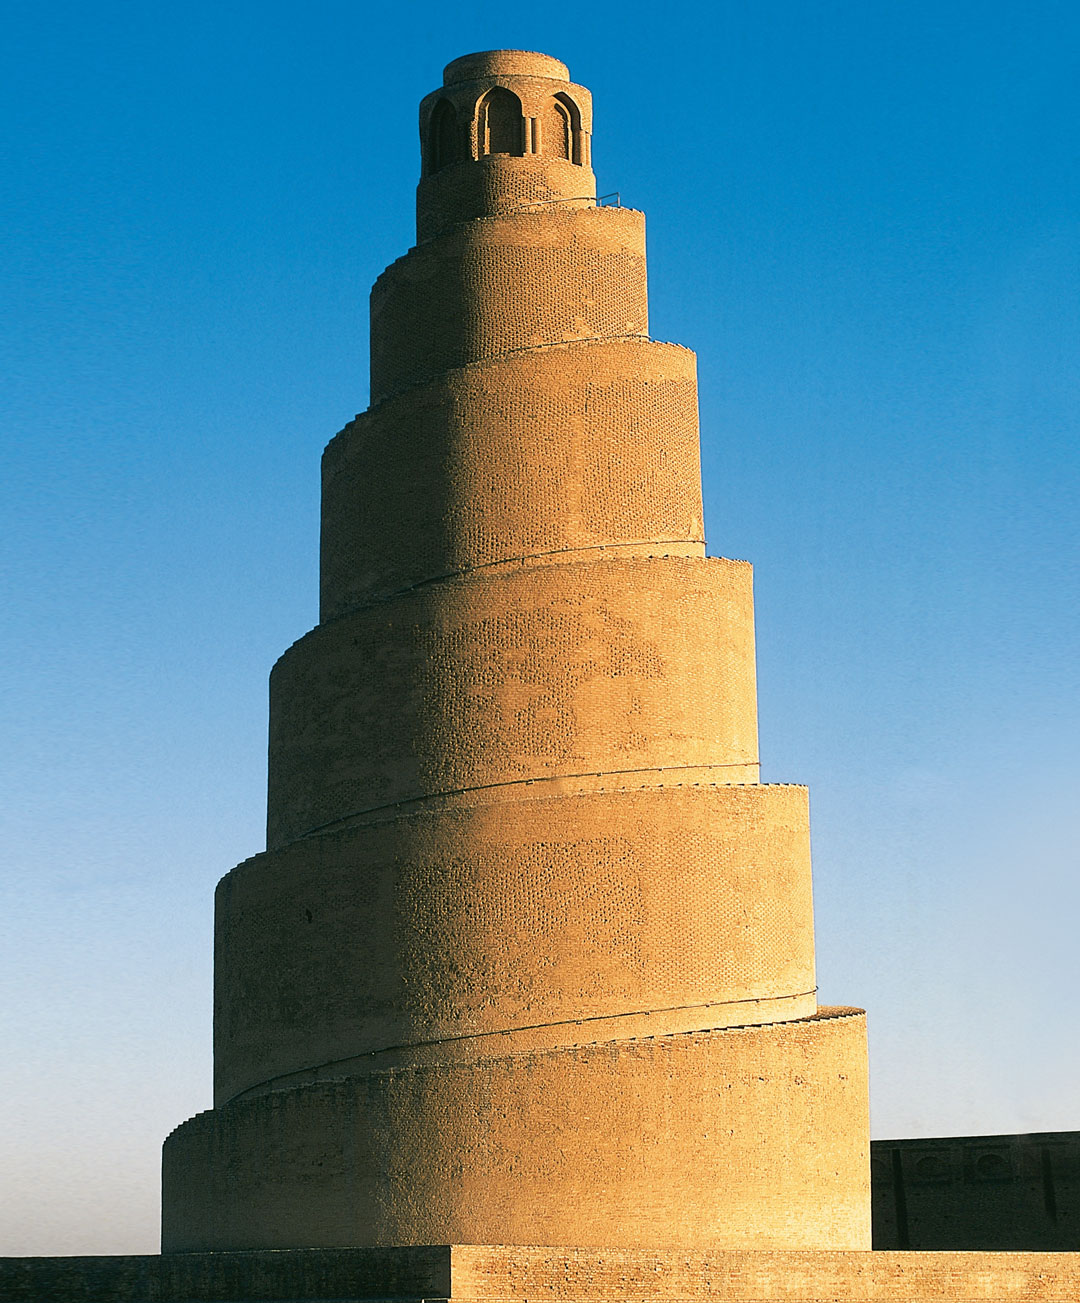 Malwiya Minaret, Samarra, Iraq, 851. From Brick